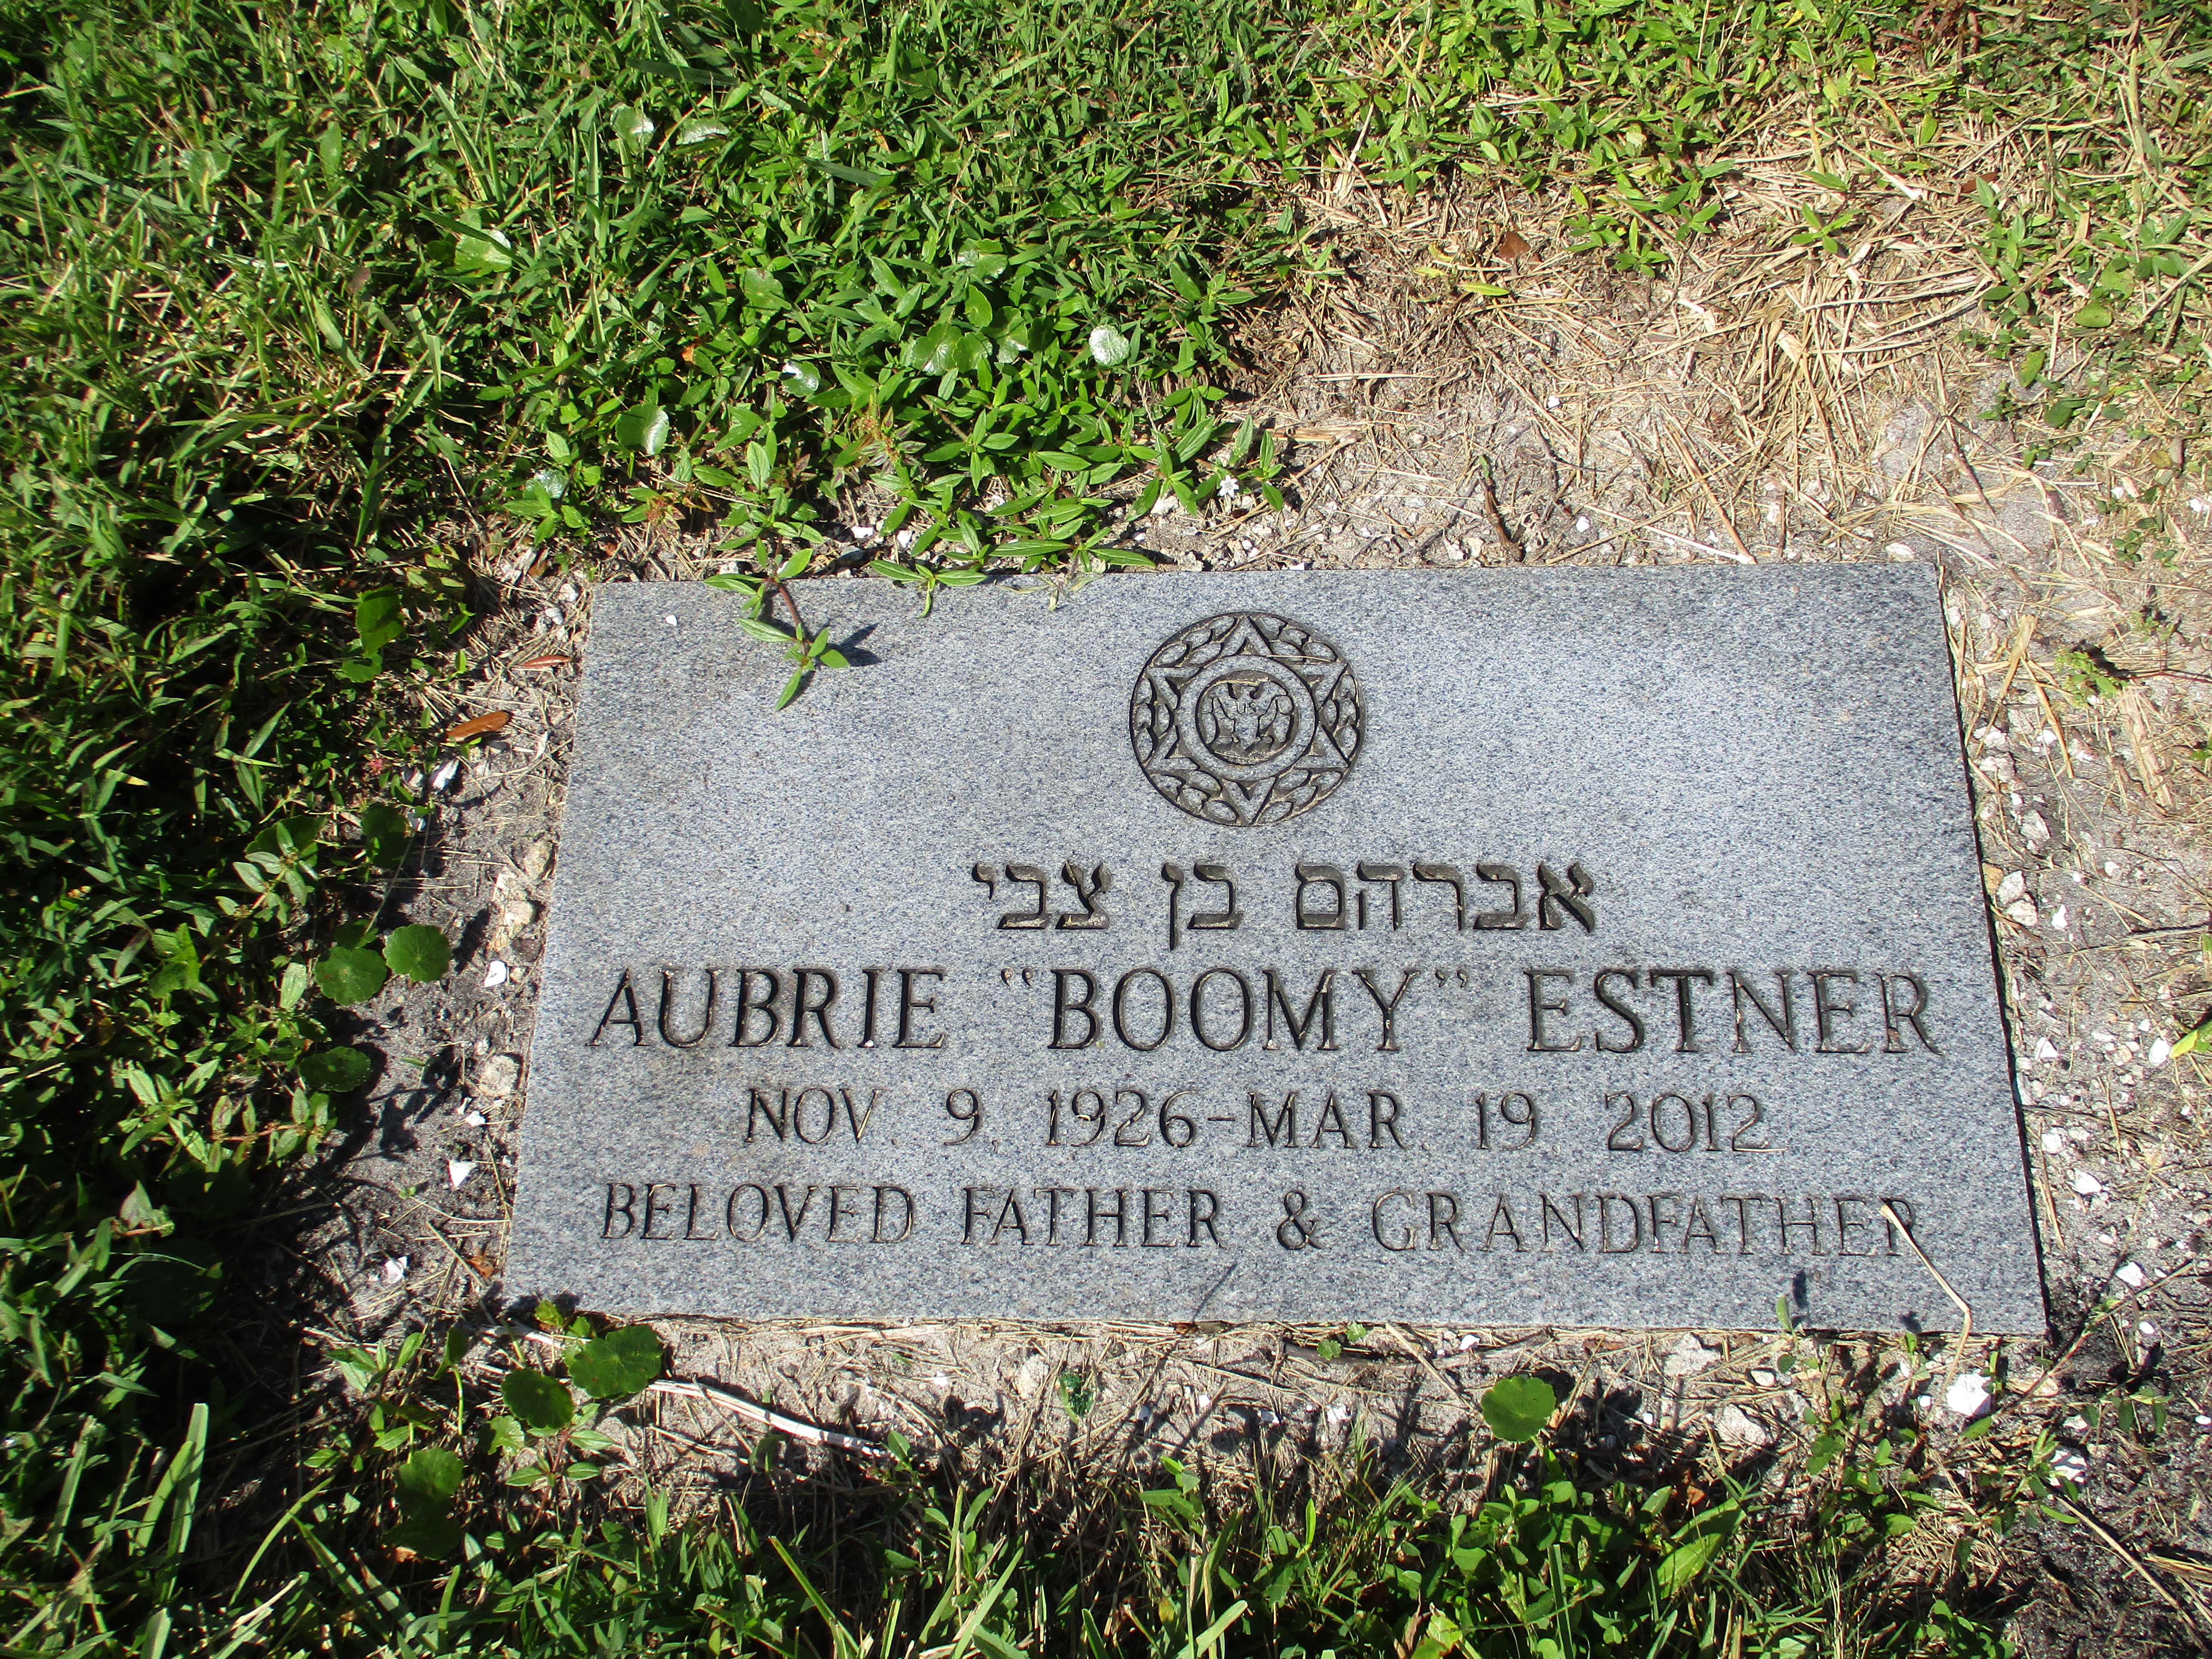 Aubrie "Boomy" Estner